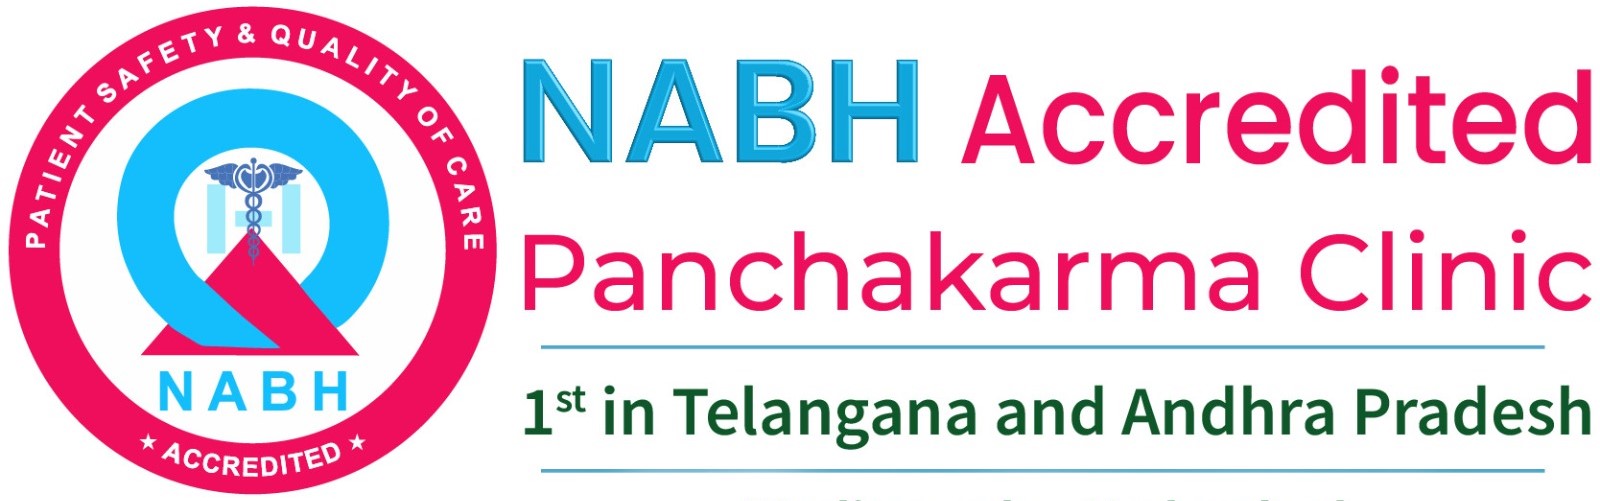 NABH accredited panchakarma clinic